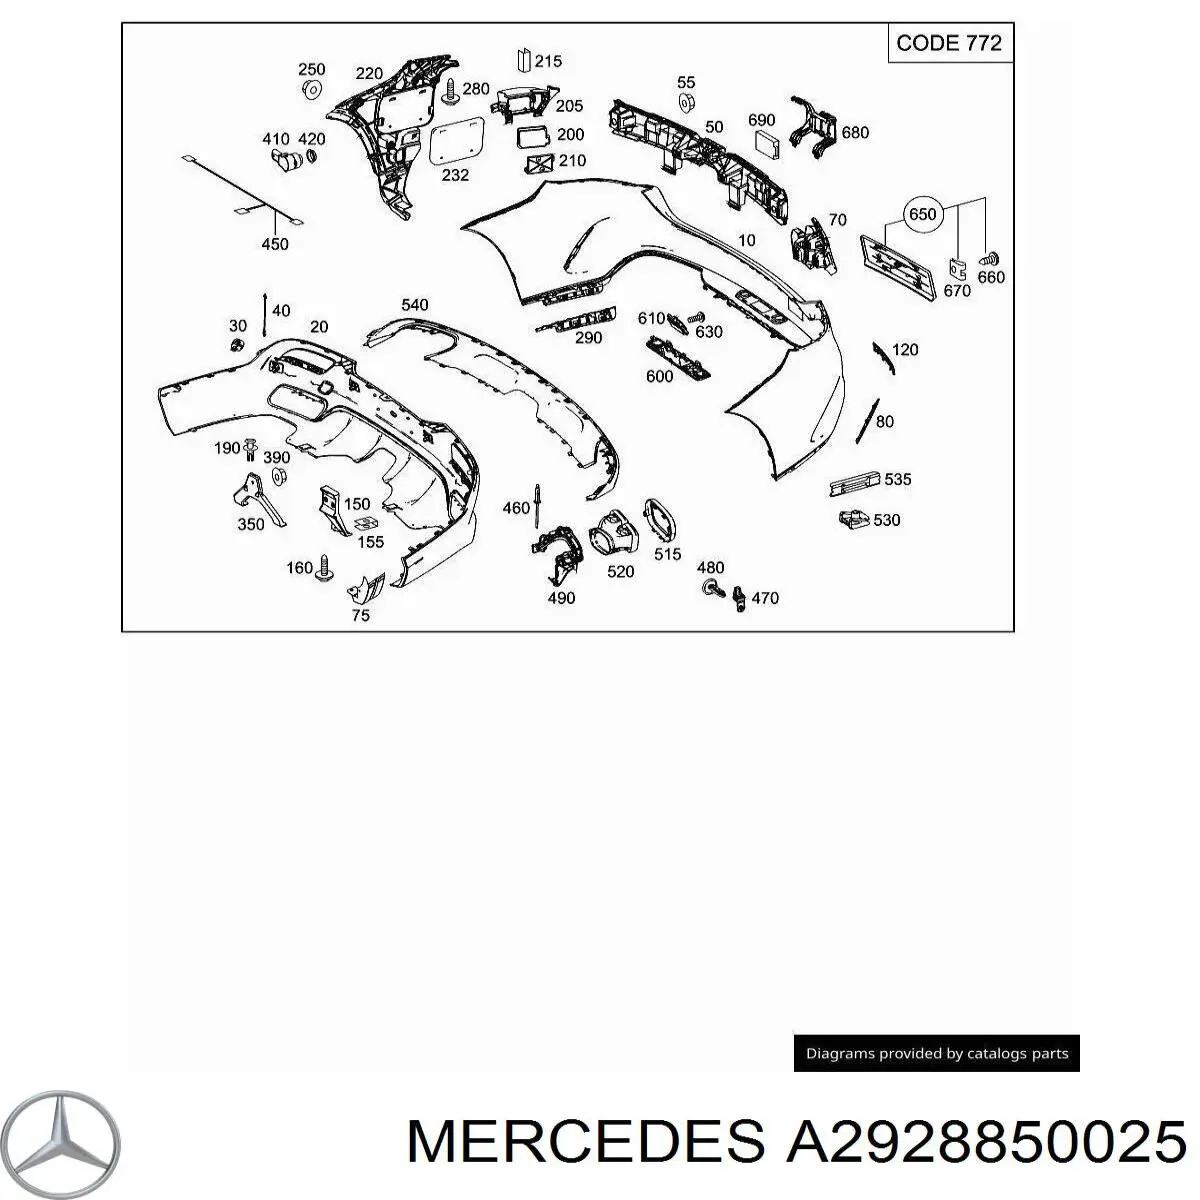 A29288500259999 Mercedes parachoques trasero